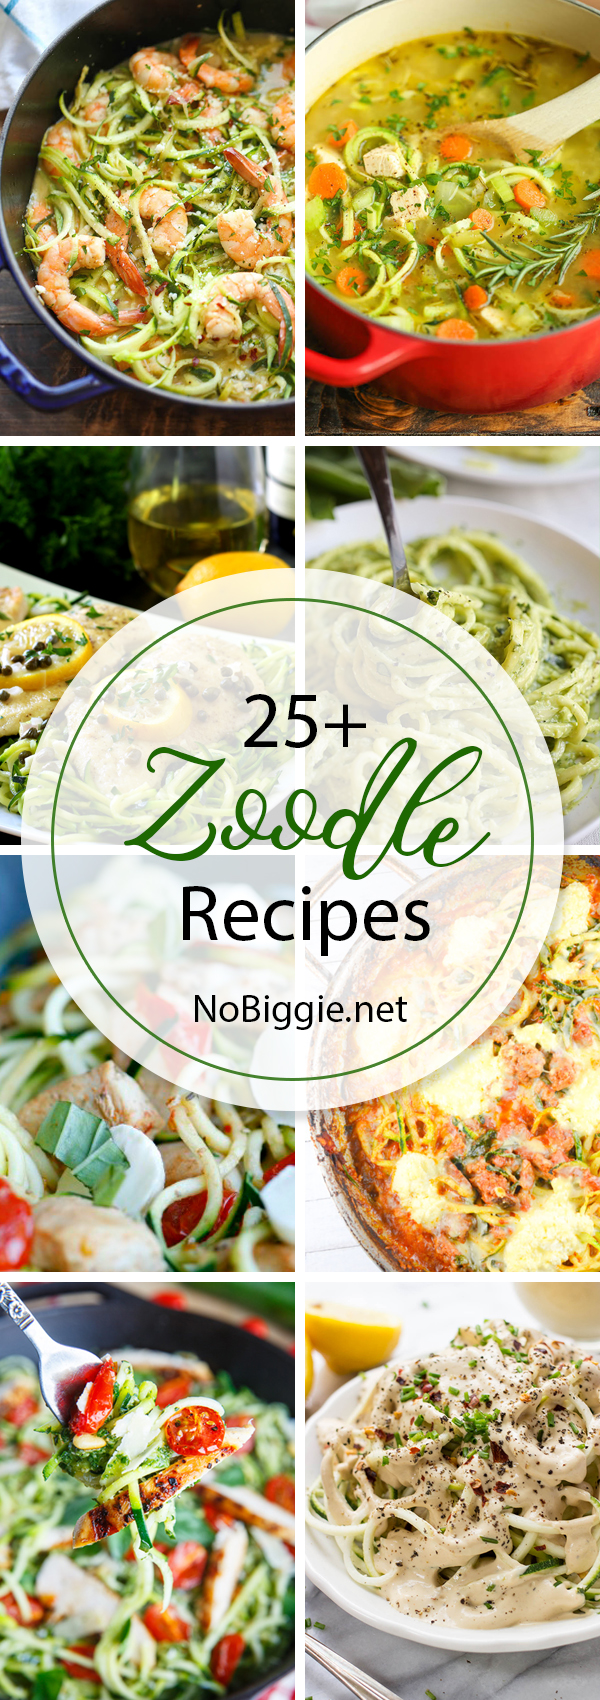 25+ zoodle recipes | NoBiggie.net